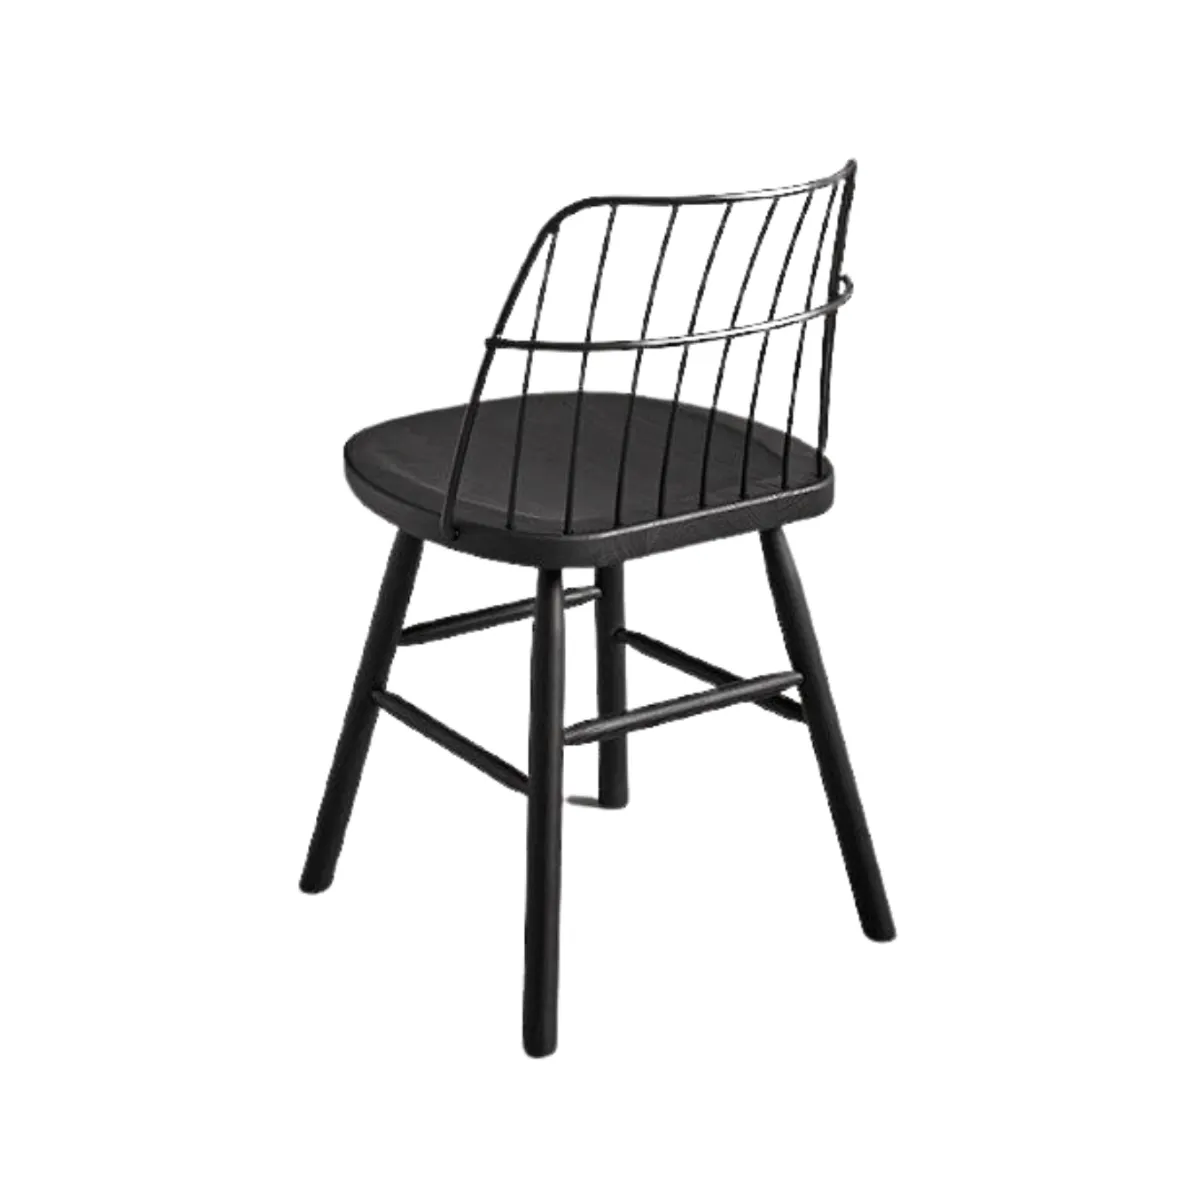 Strike S L Chair - All Black - Ex Display 1